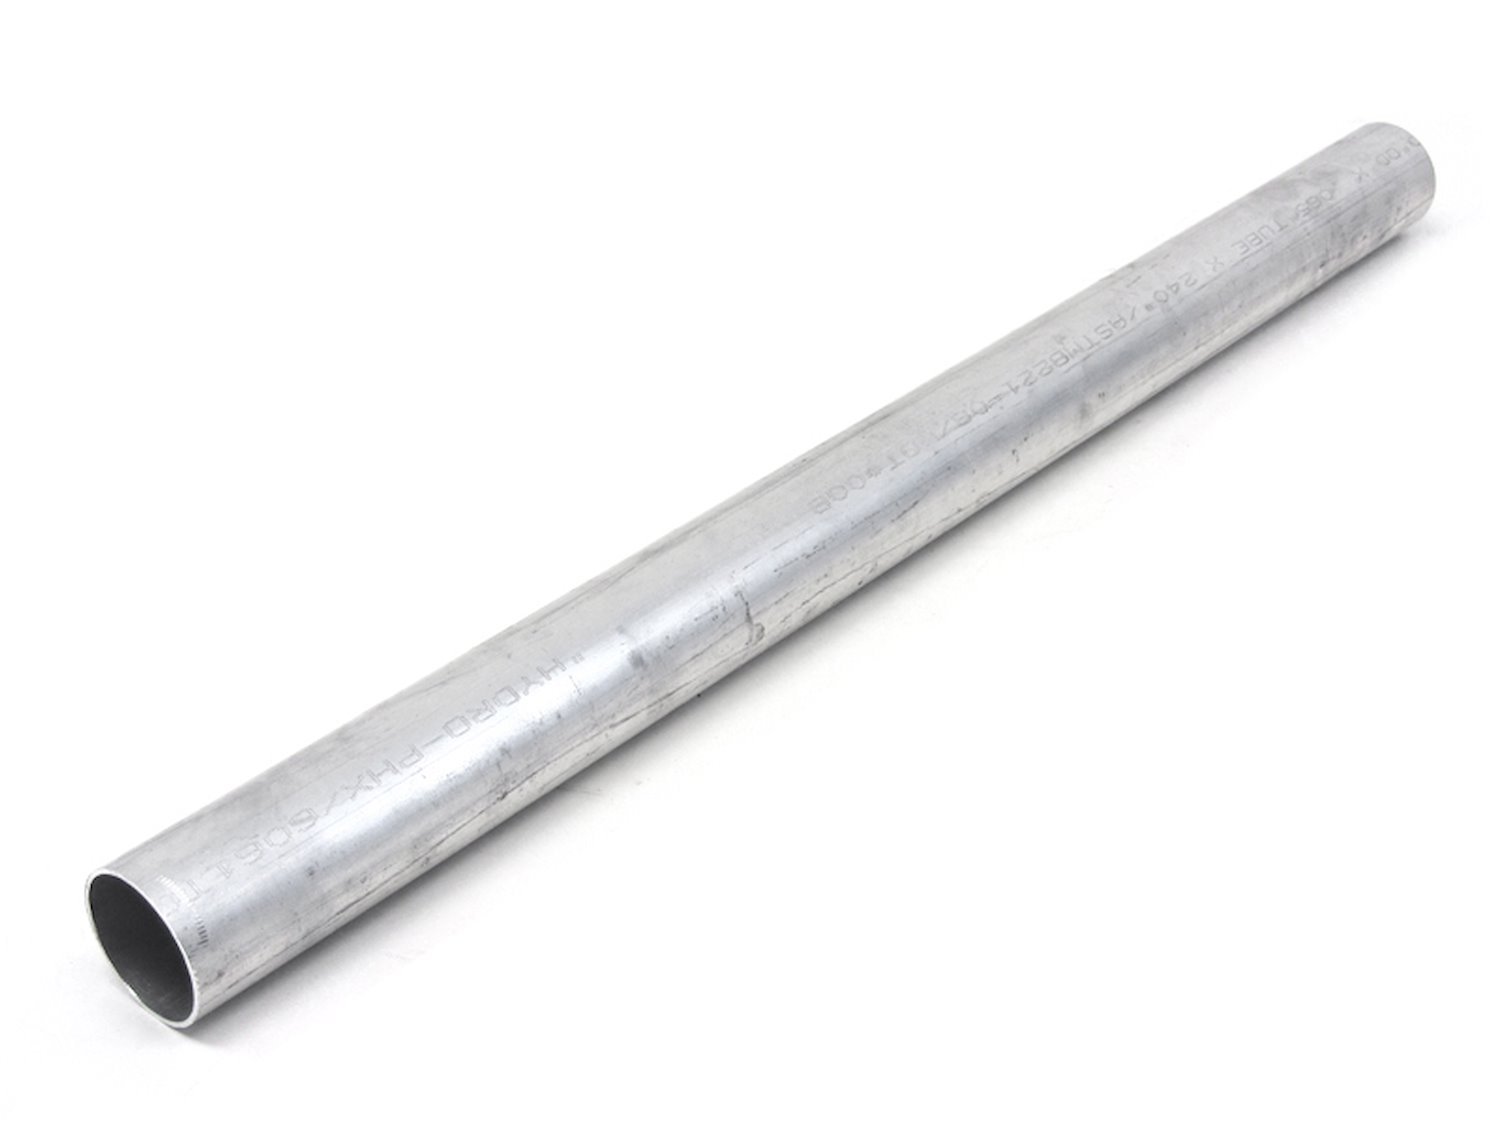 AST-2F-212 Aluminum Tubing, 6061 Aluminum, Straight Tubing, 2-1/8 in. OD, Seamless, Raw Finish, 2 ft. Long